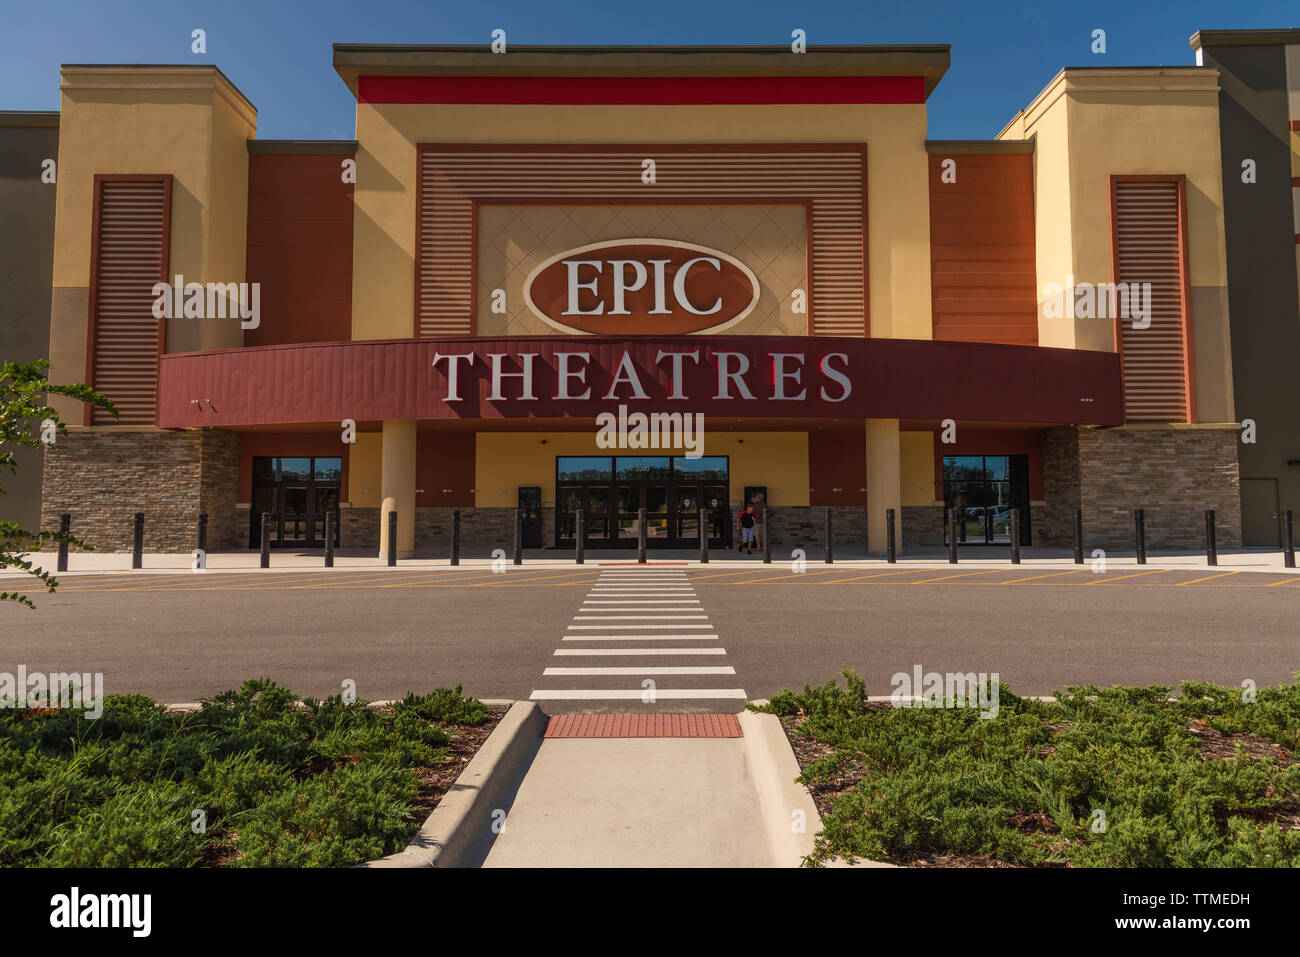 Epic Theatres Movie Theater Exterior Building Entrance Stock Photo